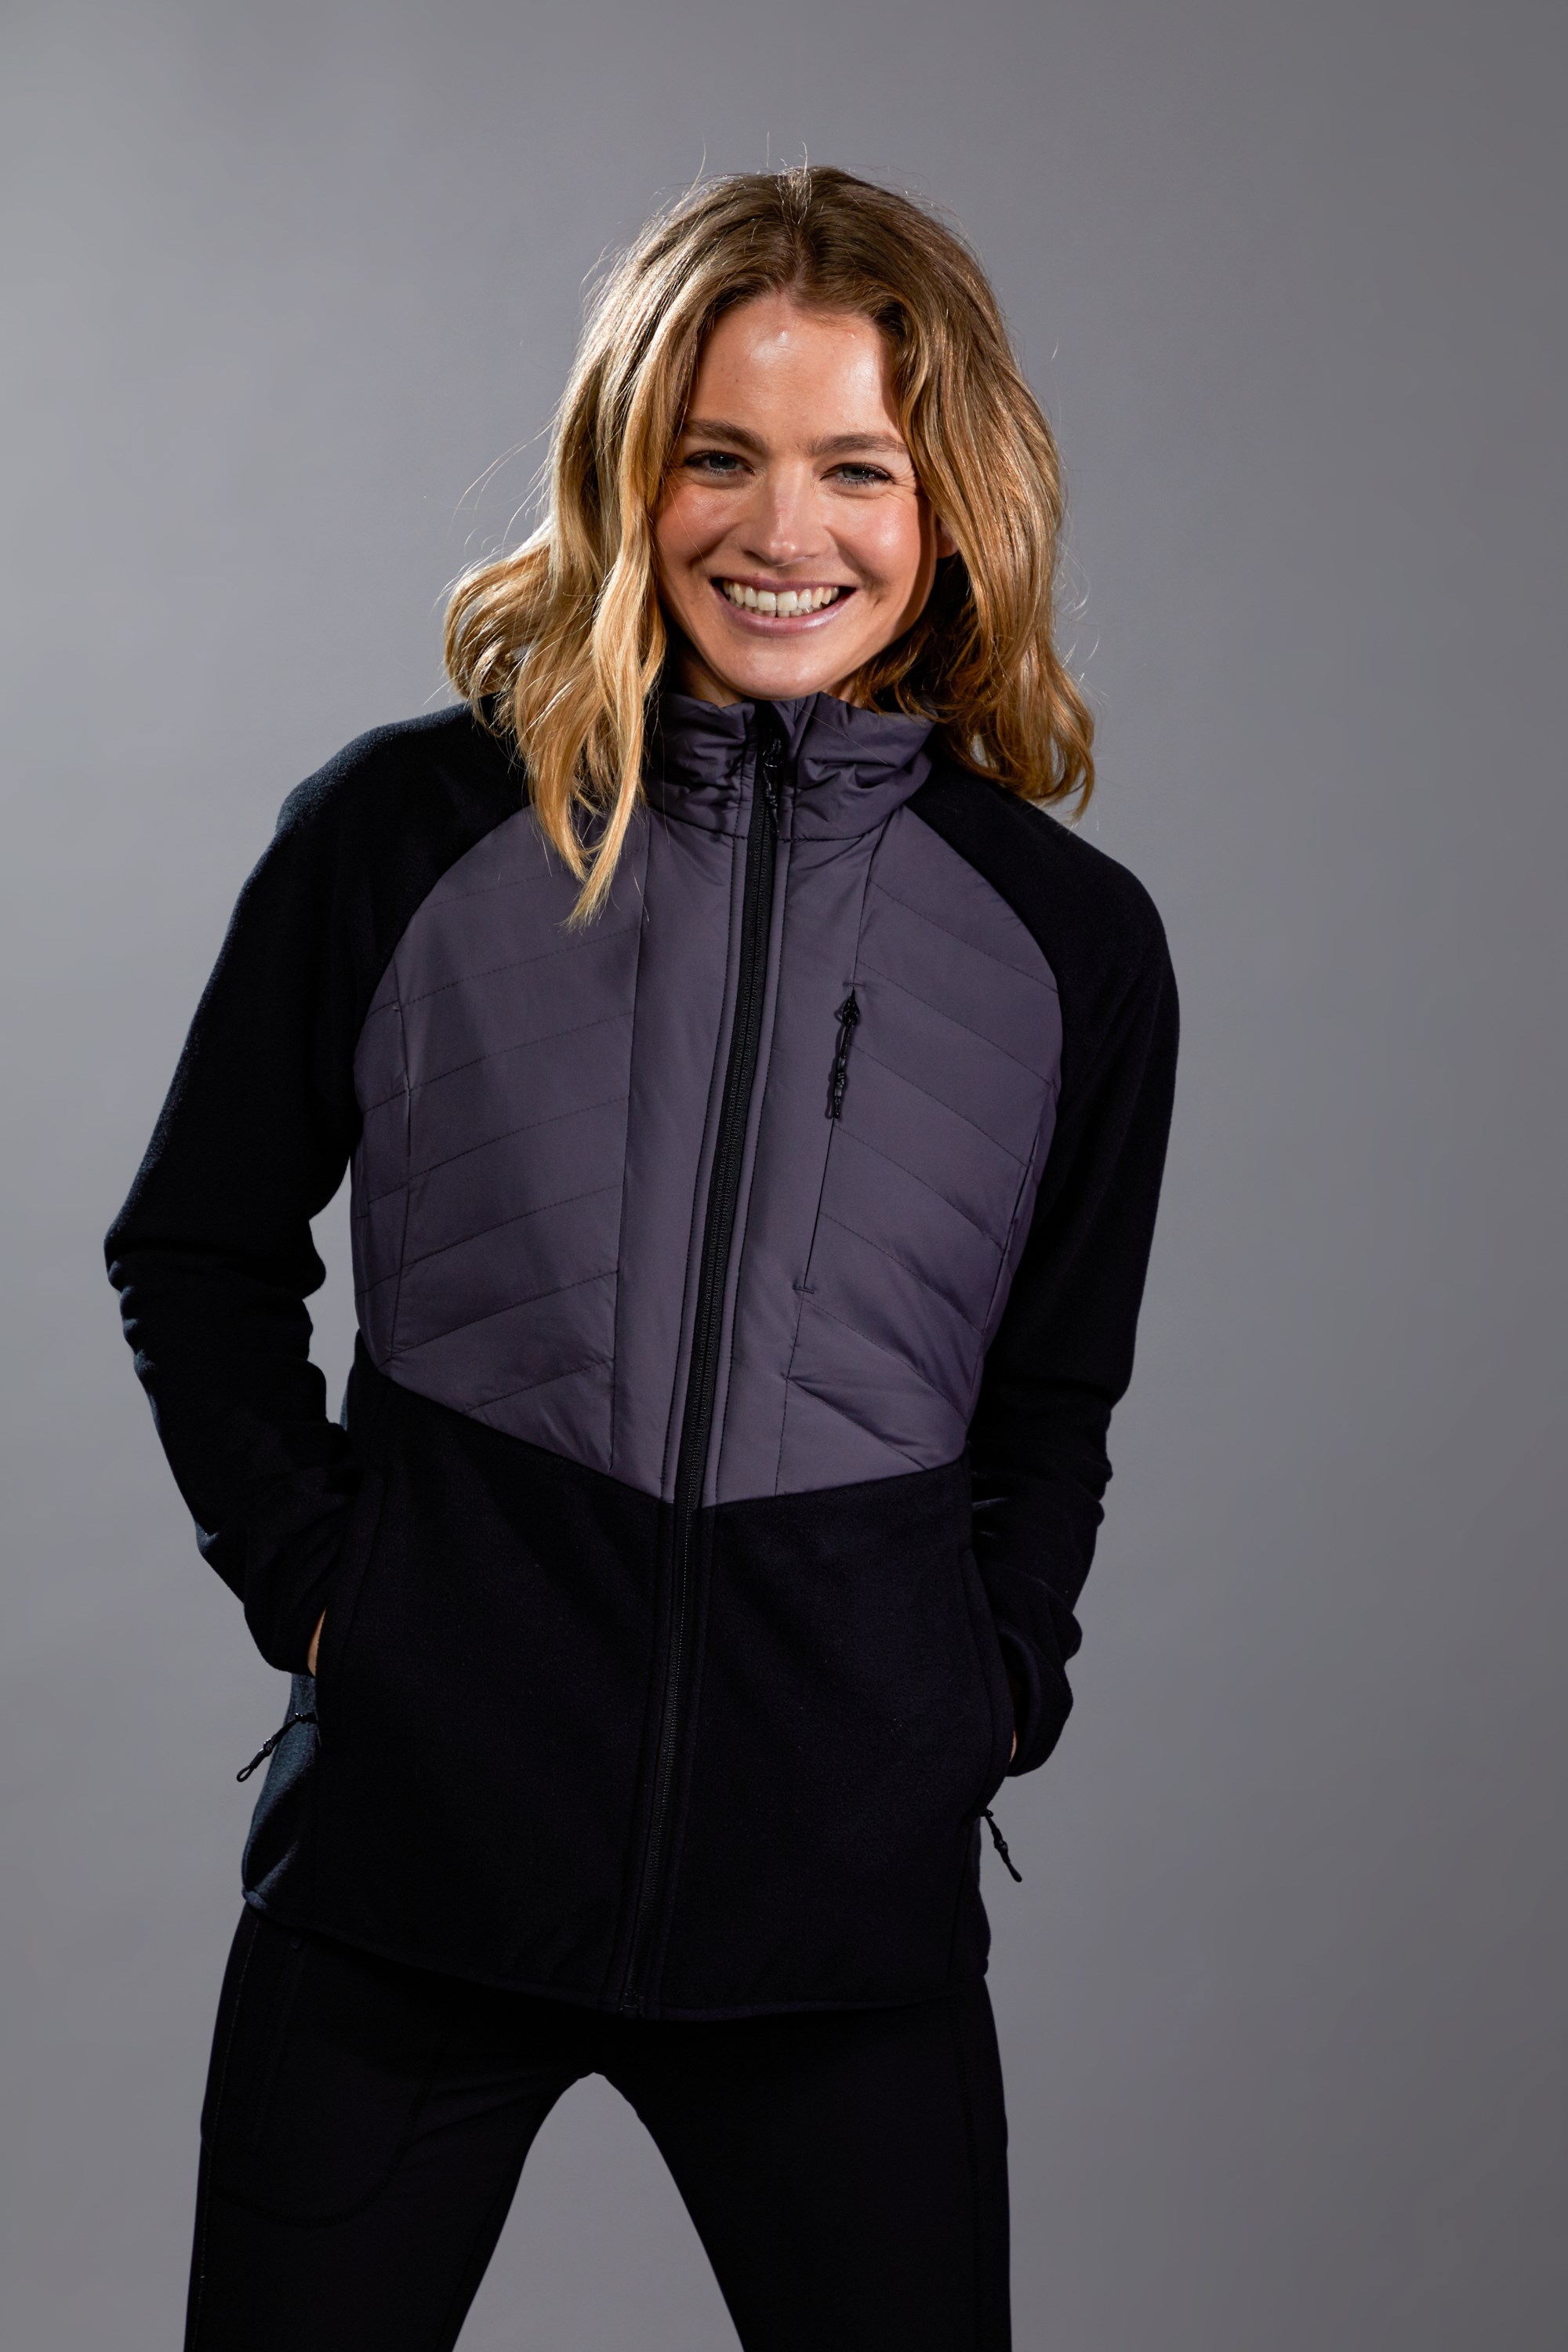 Grabsa Women Fit Ultra Soft Warm Lightweight Coat Full Zip Fleece Jacket